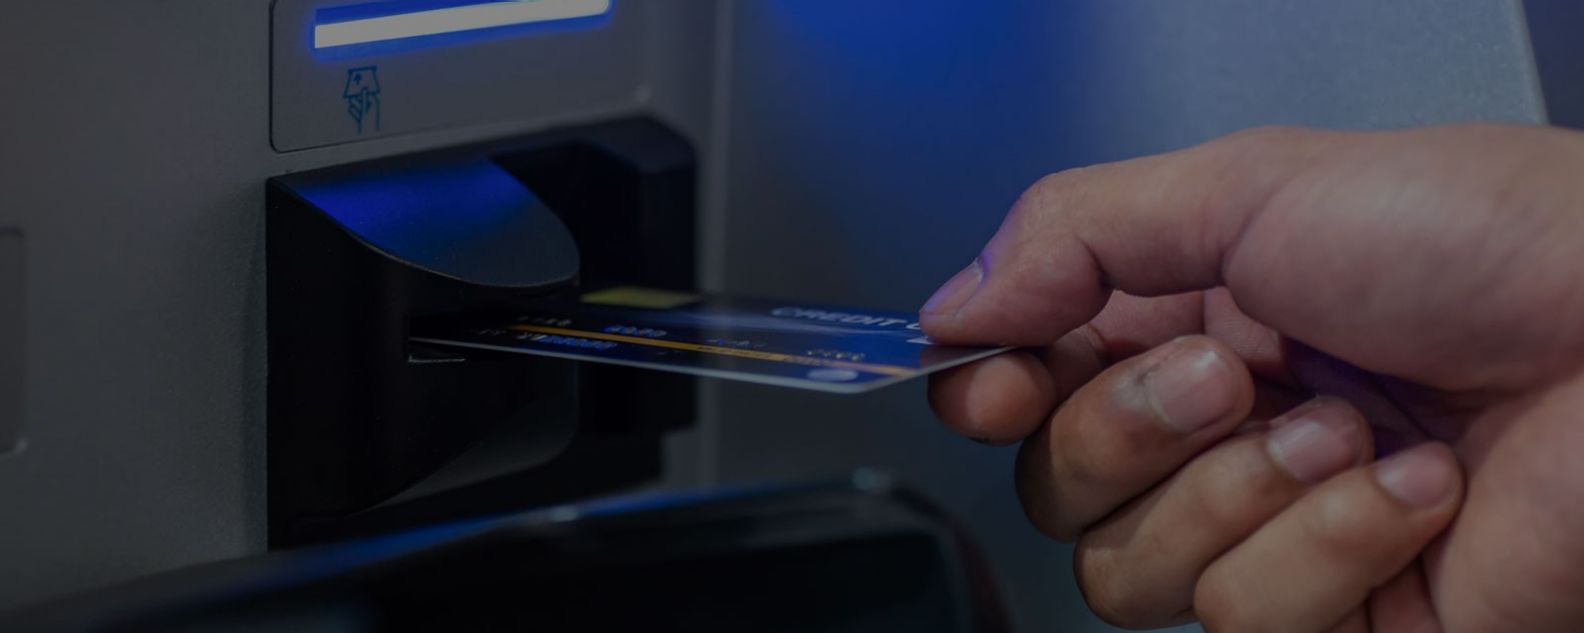 Man inserting debit card into an ATM machine